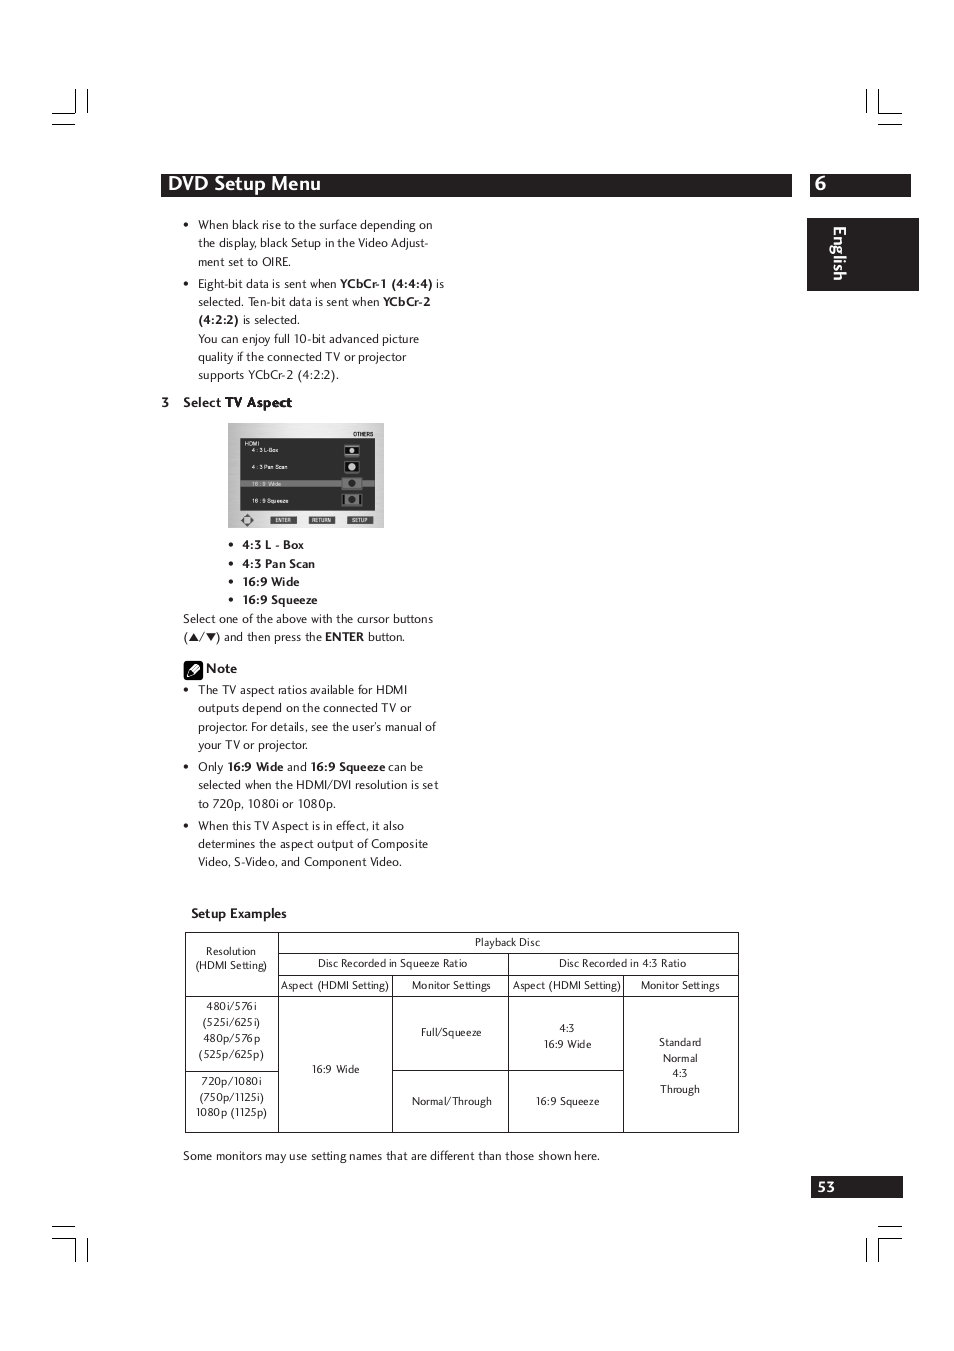 6dvd setup menu, English | Marantz DV9600 User Manual | Page 53 / 68